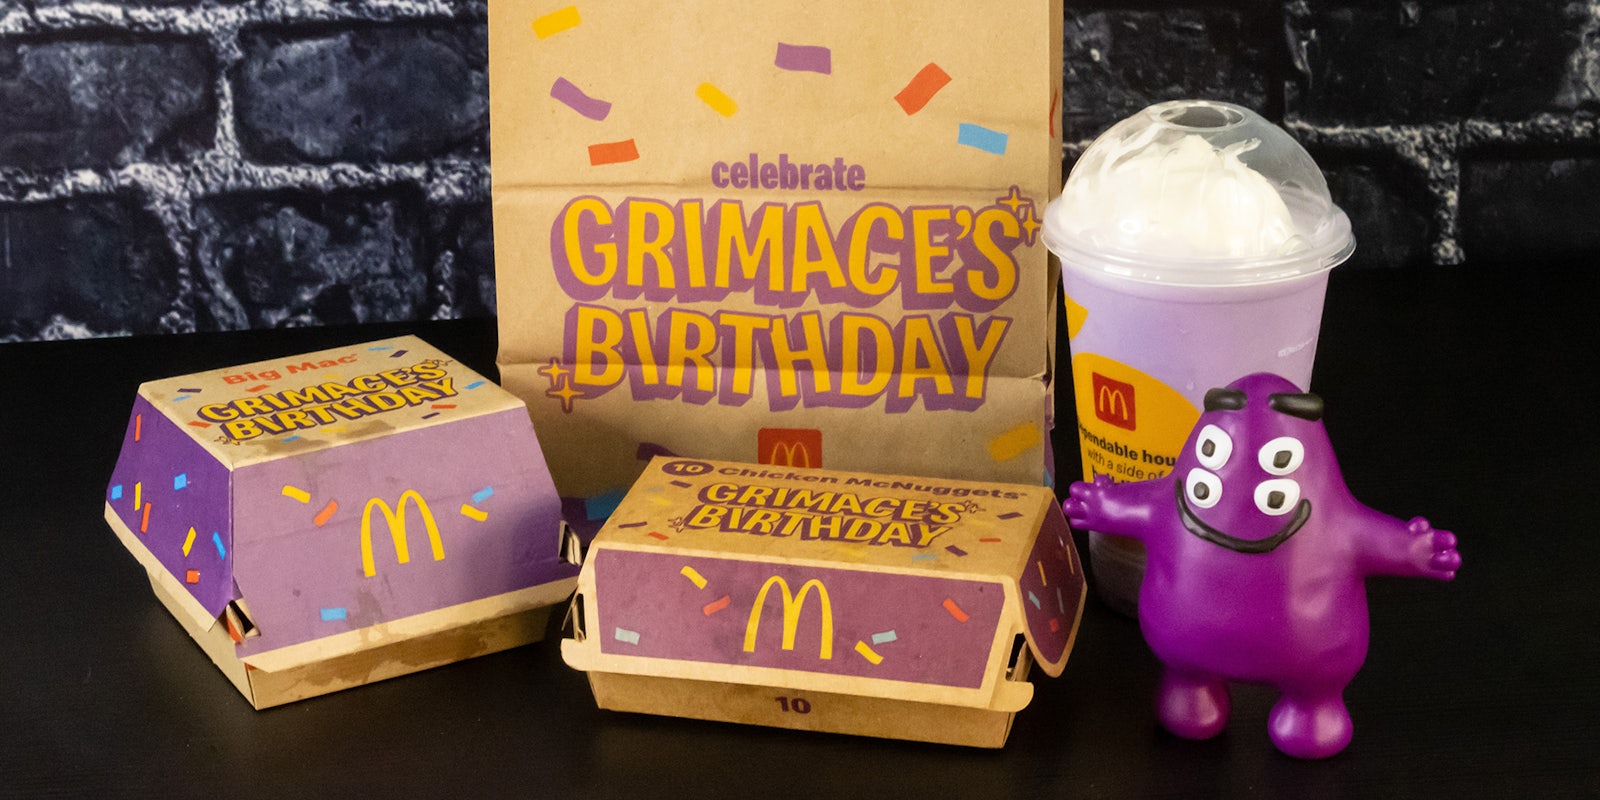 McDonald's Grimace's Birthday Meal with Big Mac, Fries, Chicken Nuggets, Milkshake, Grimace Toy